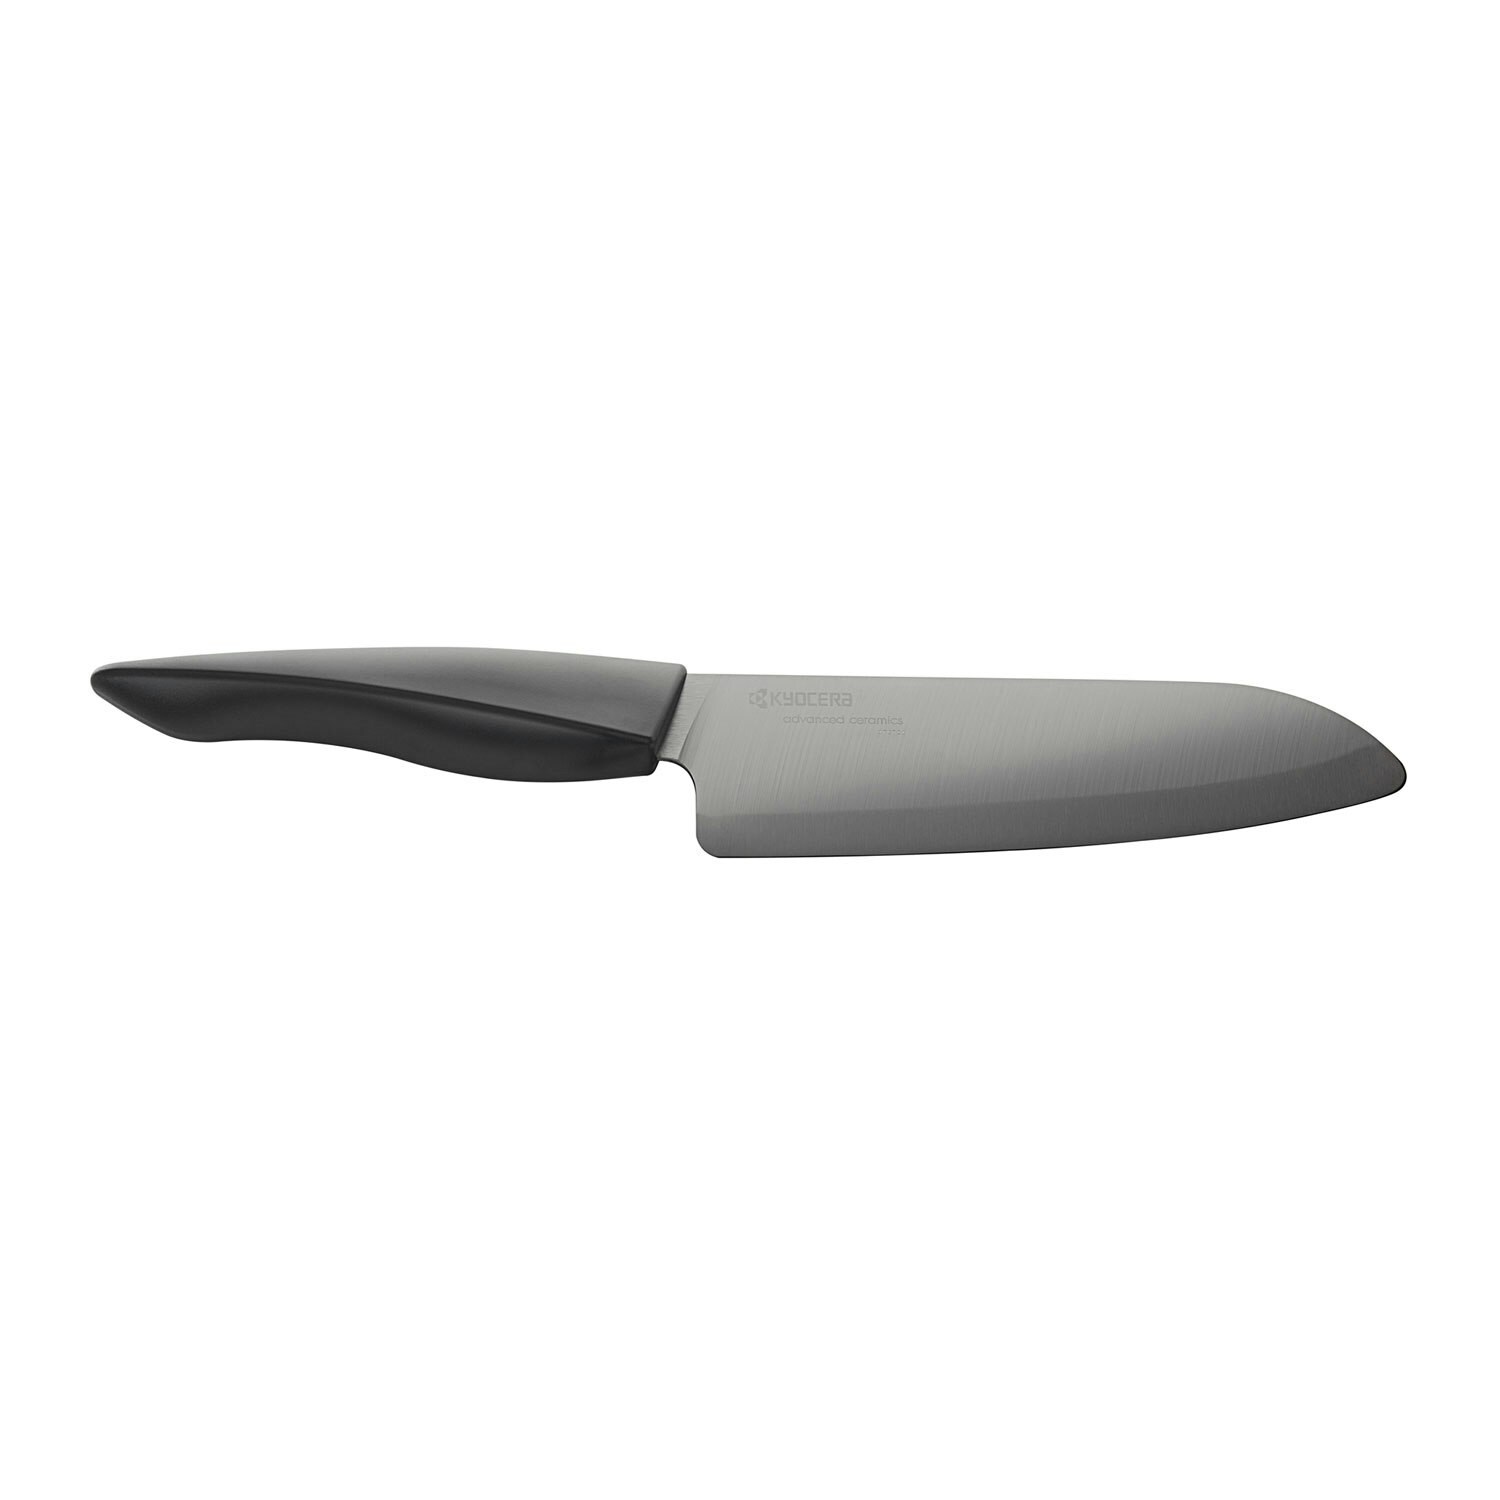 https://royaldesign.com/image/2/kyocera-shin-chef-knife-santoku-knife-16-cm-black-0